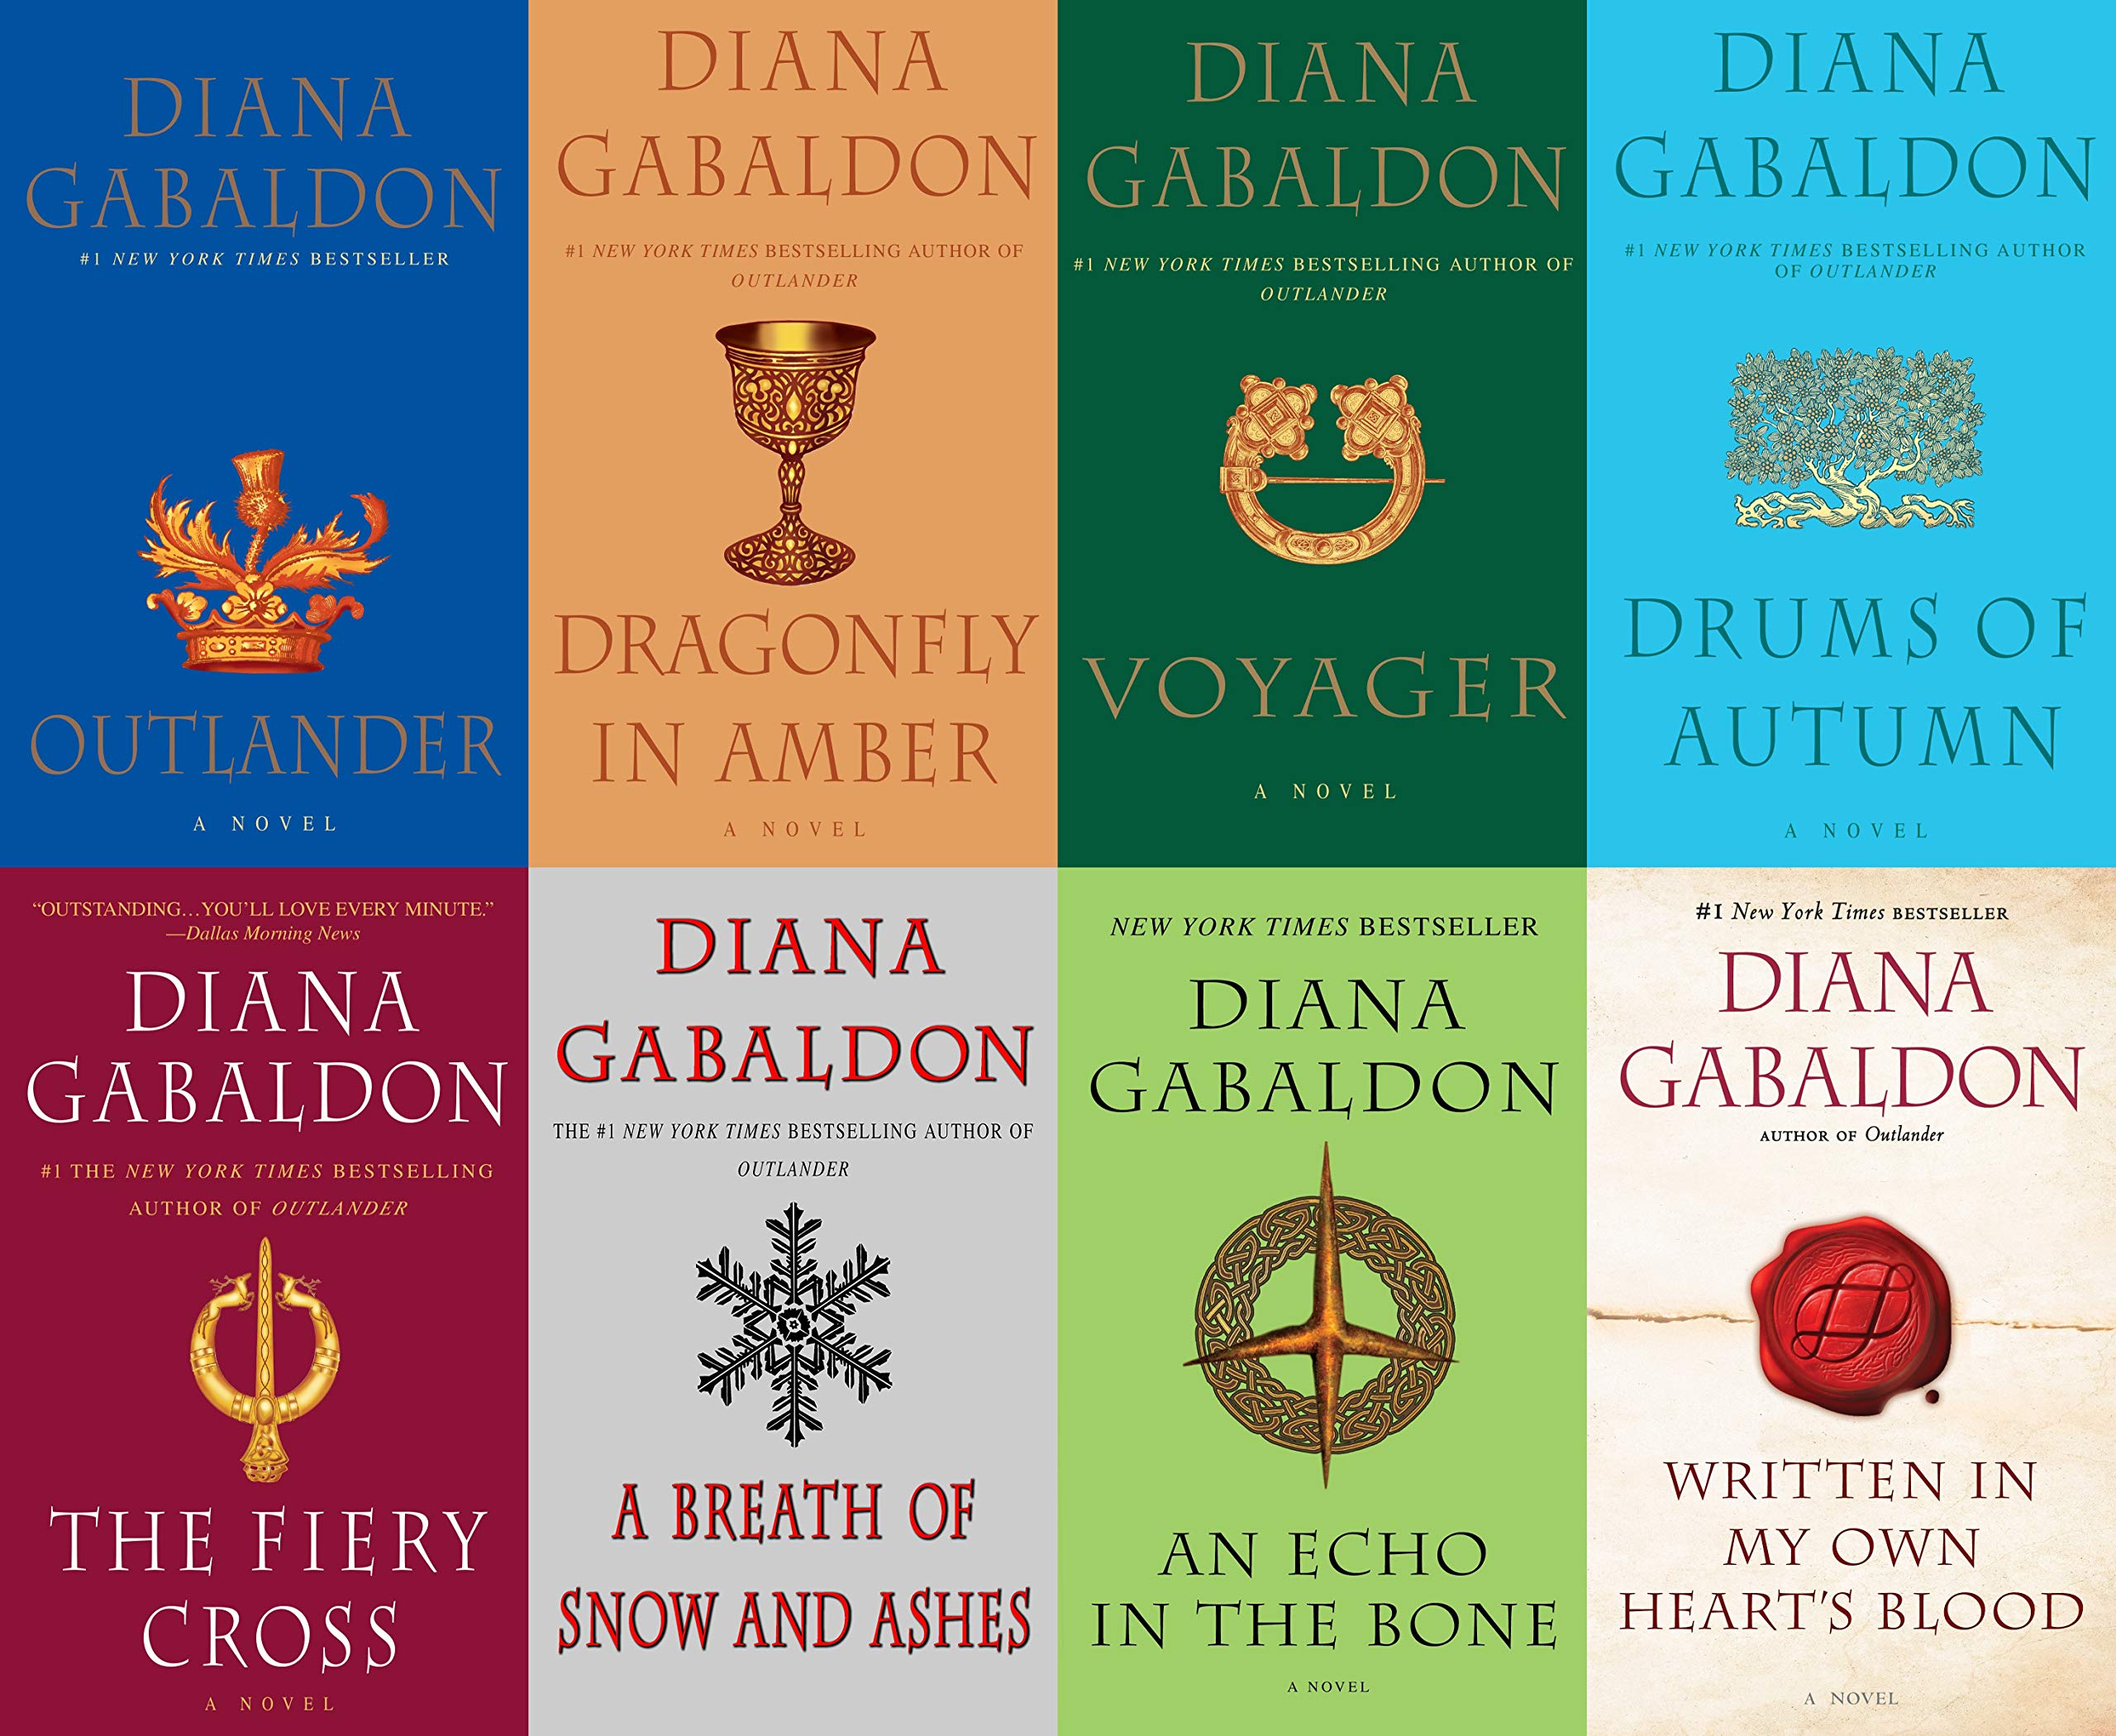 Outlander Series Book 7 Synopsis